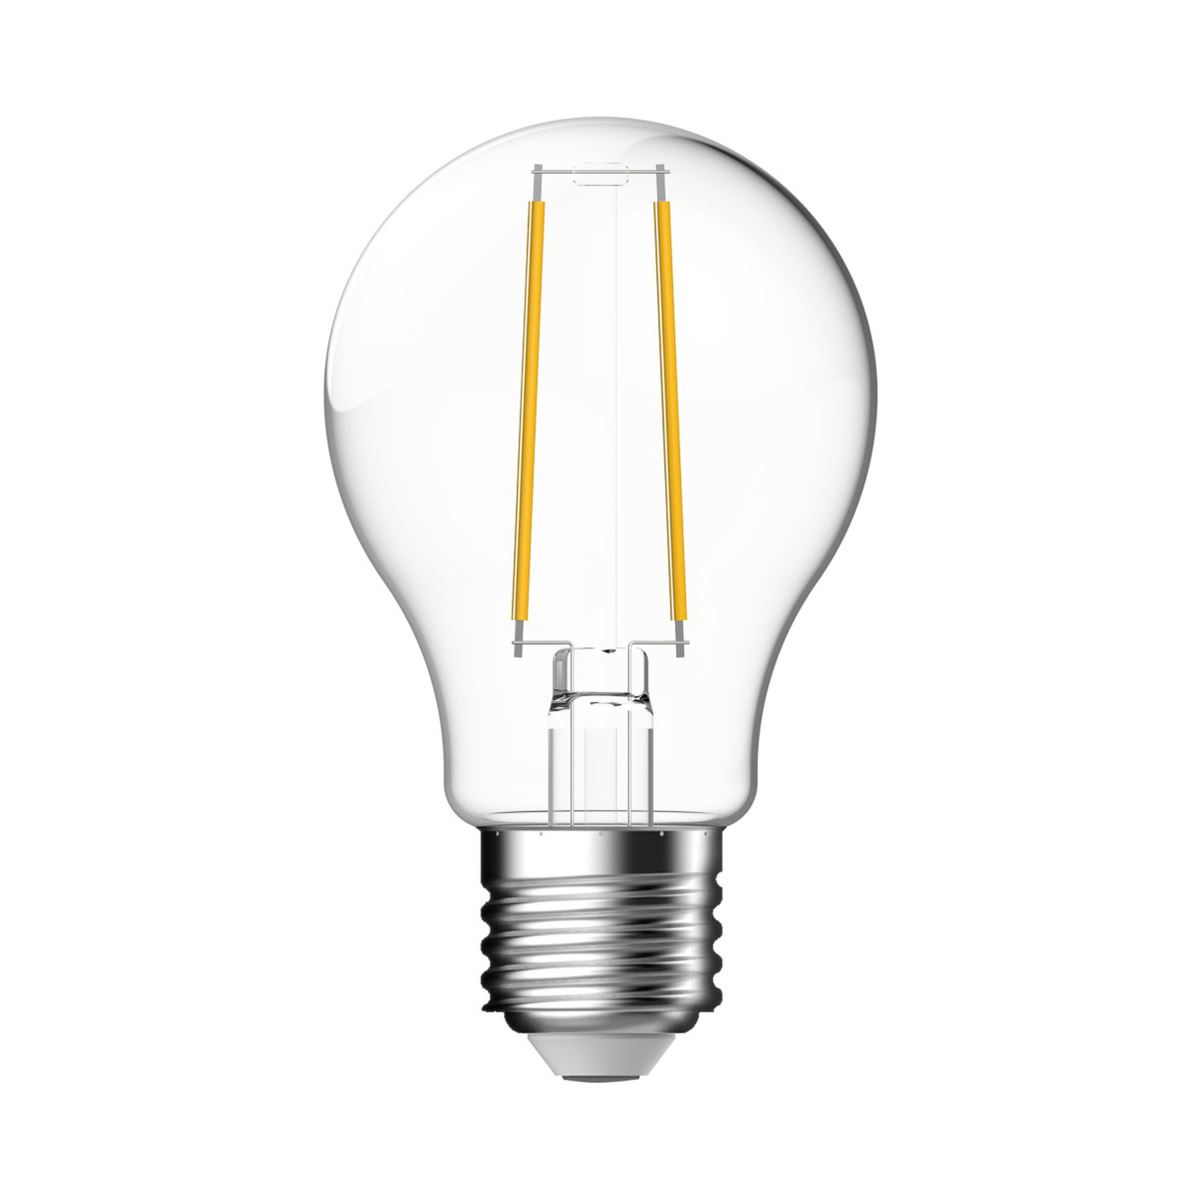 Nordlux Energetic LED Leuchtmittel E27 A60 485lm 2700K 2,3W 80Ra 360° 6x6x10,4cm von Energetic